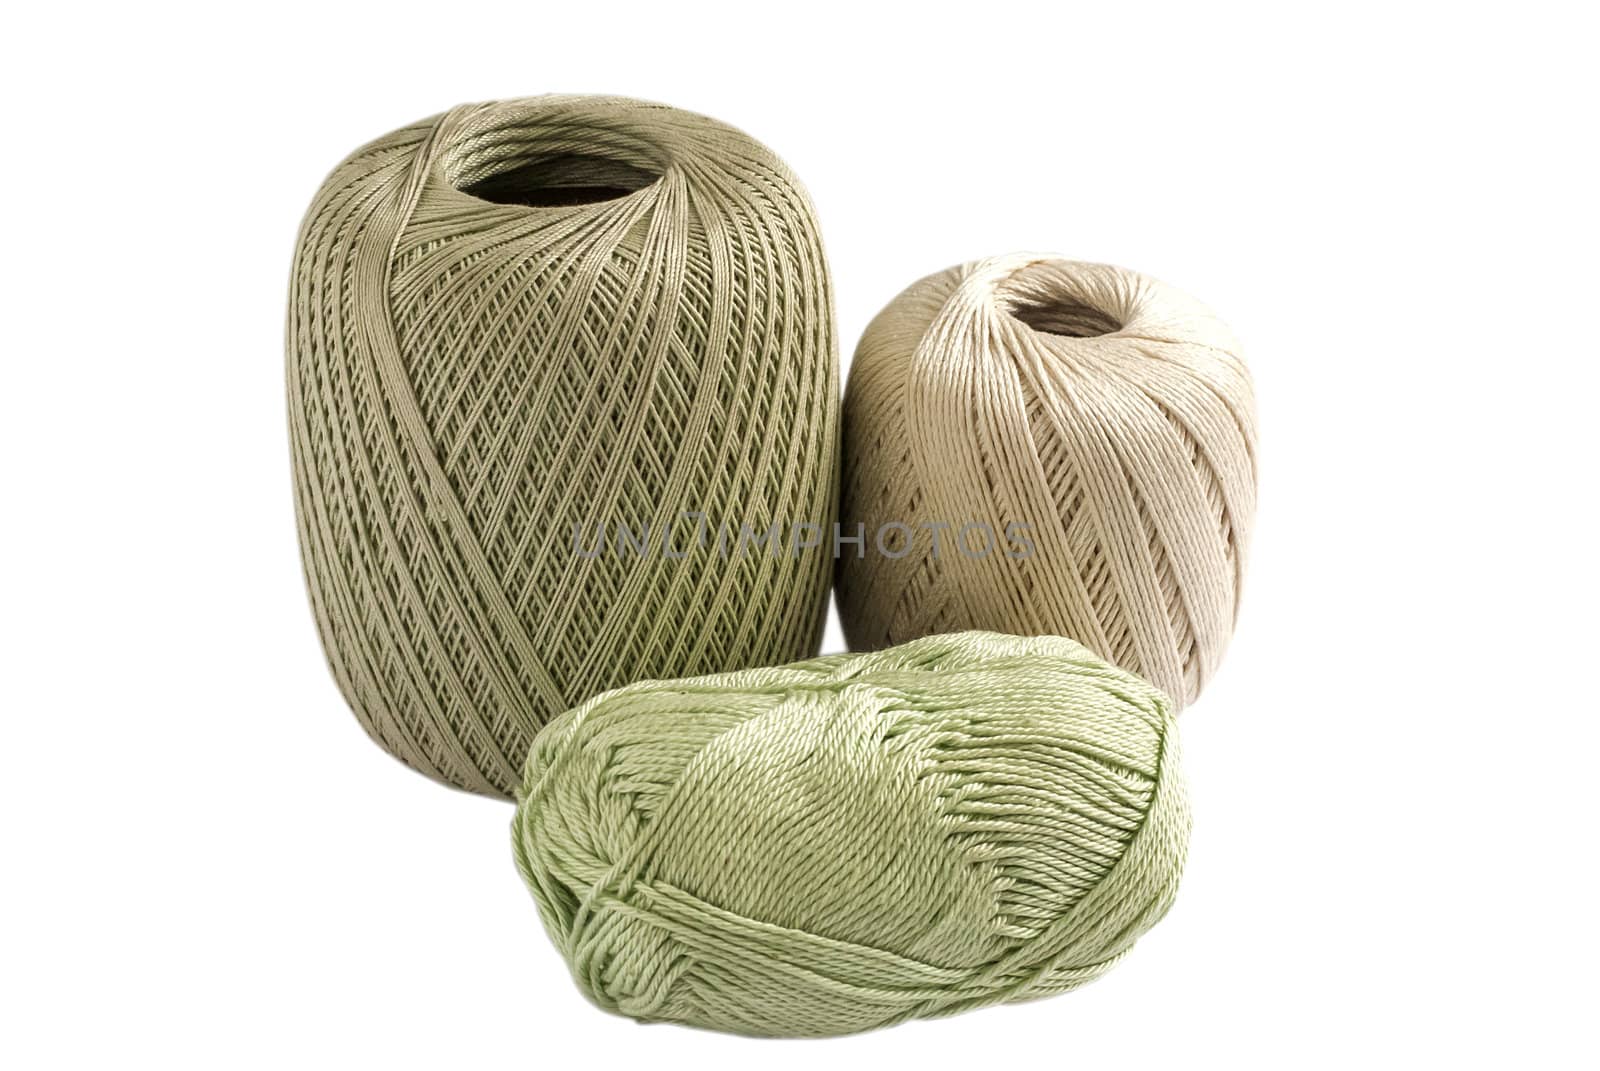 Skeins of yarn for knitting by varbenov